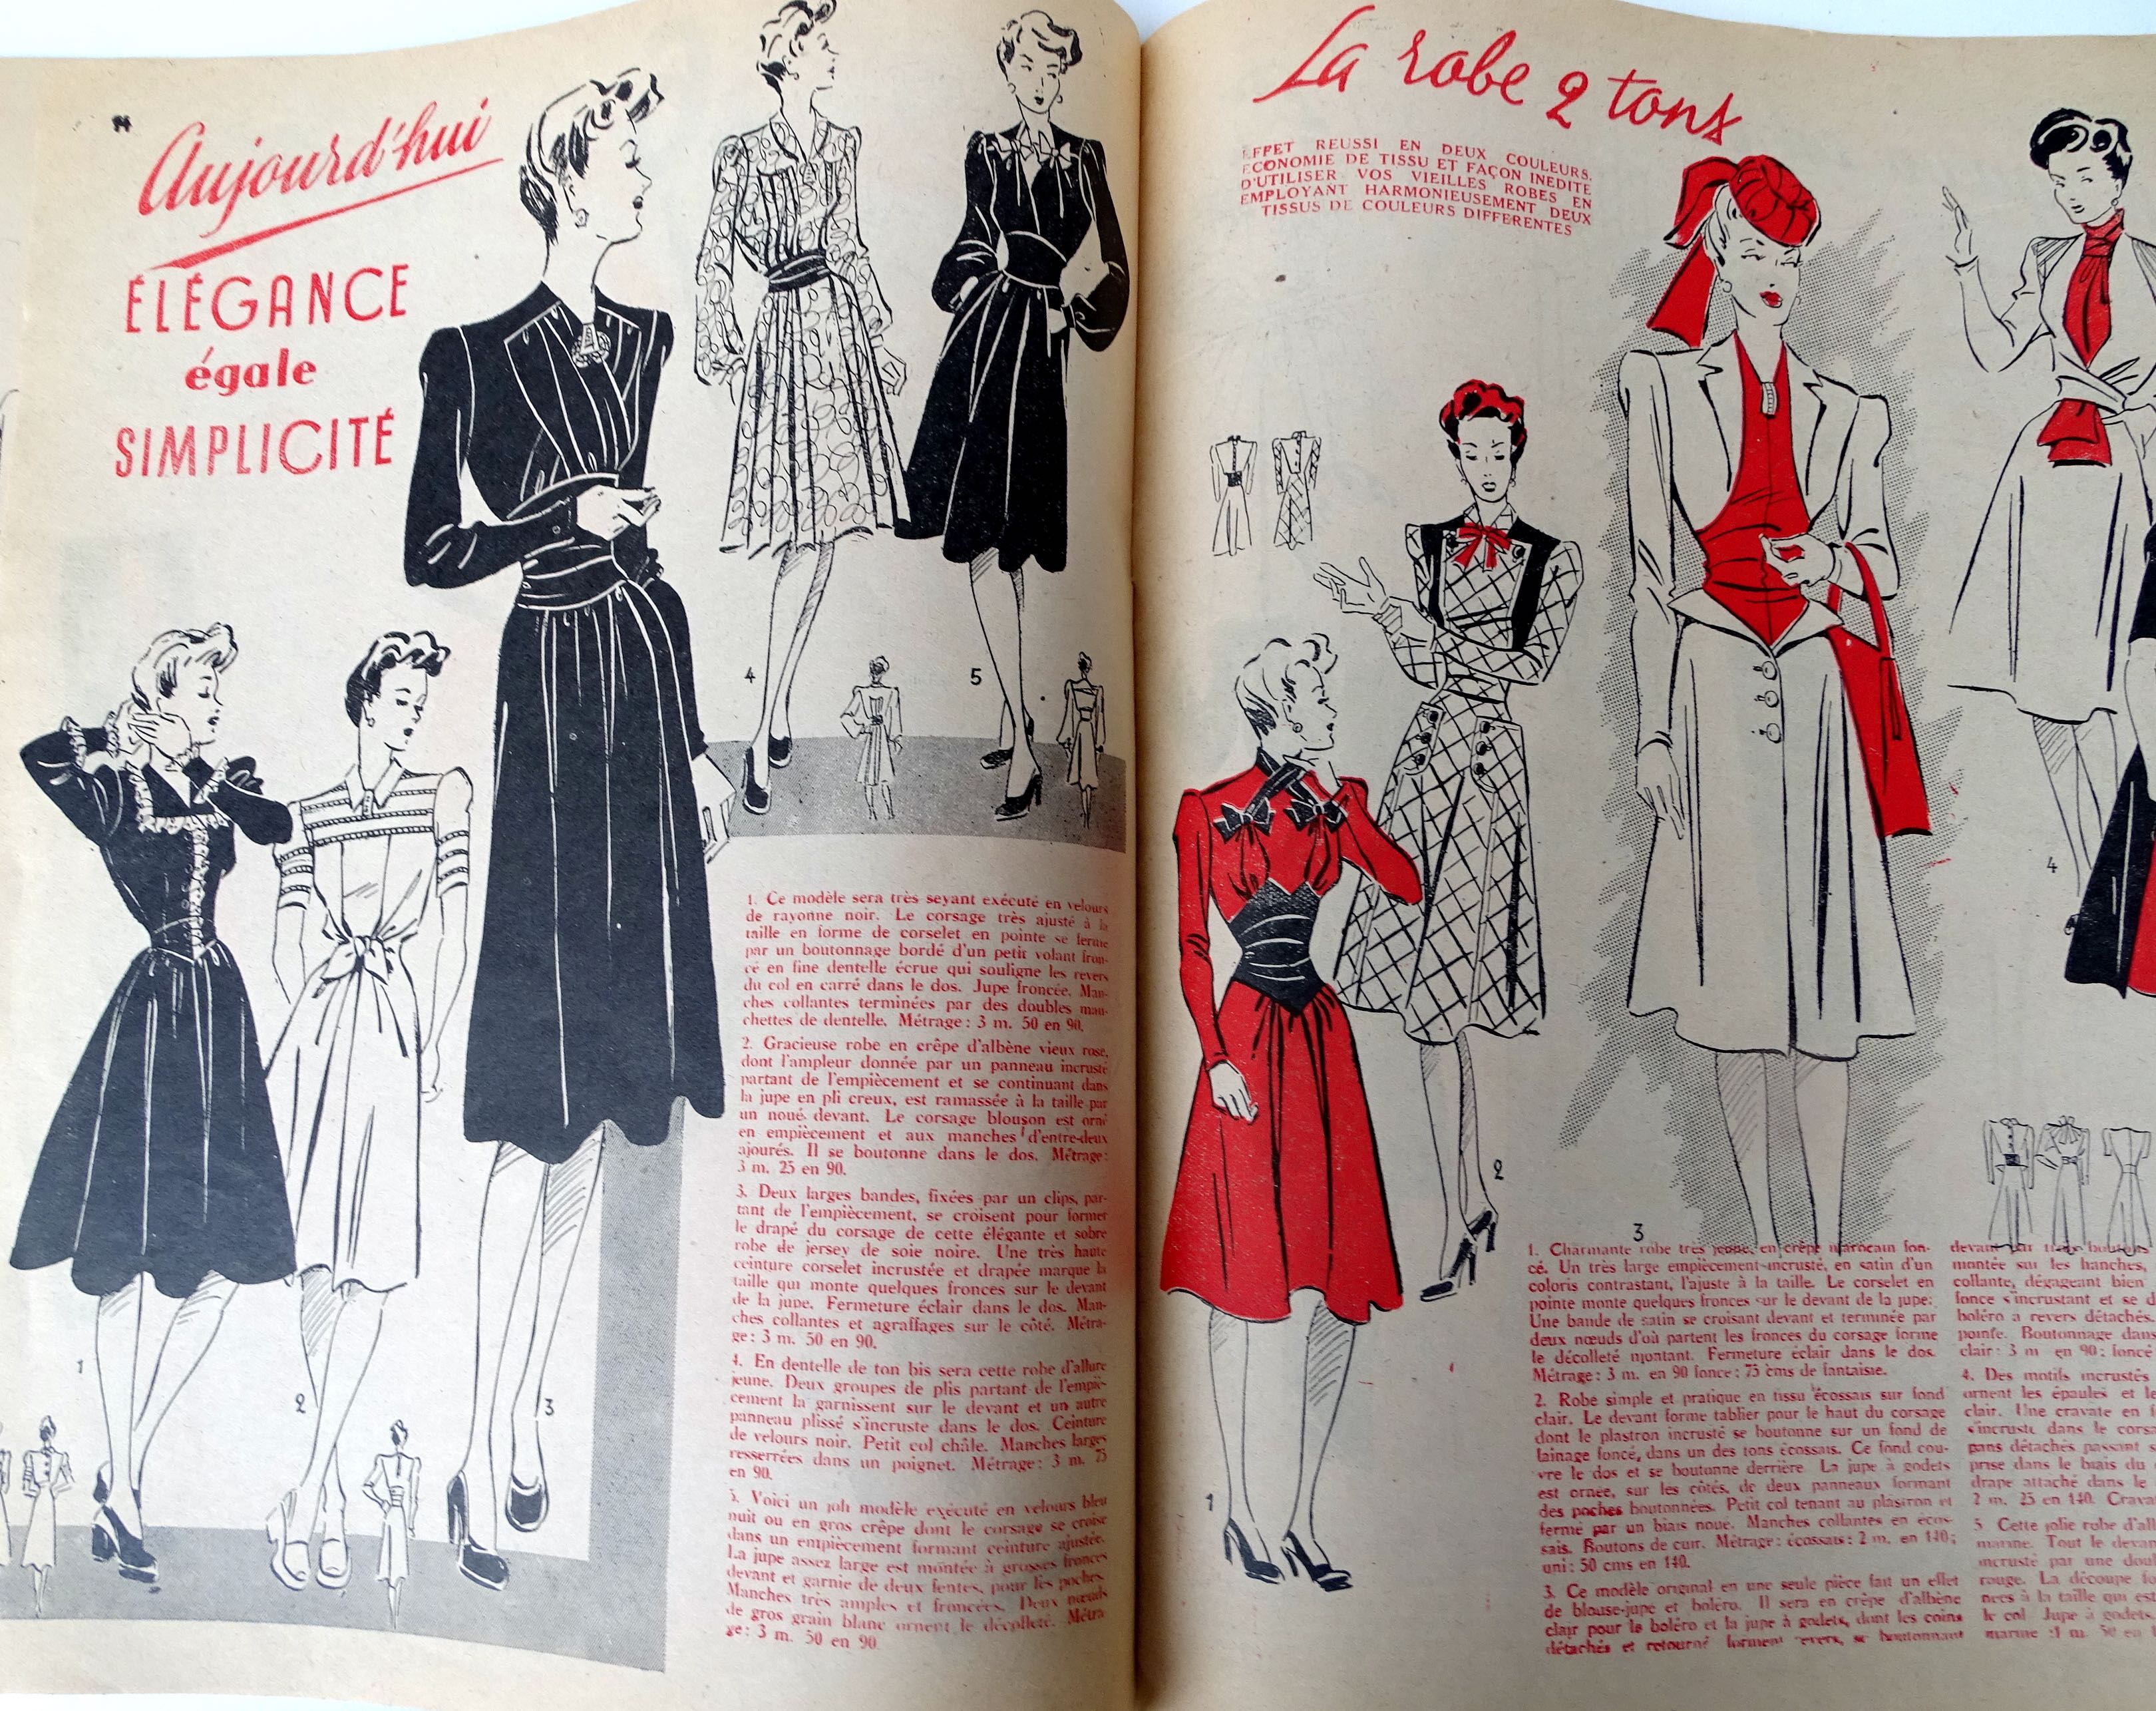 Je m&#039;habille ... Magazine Mode f&eacute;minine Septembre 1941